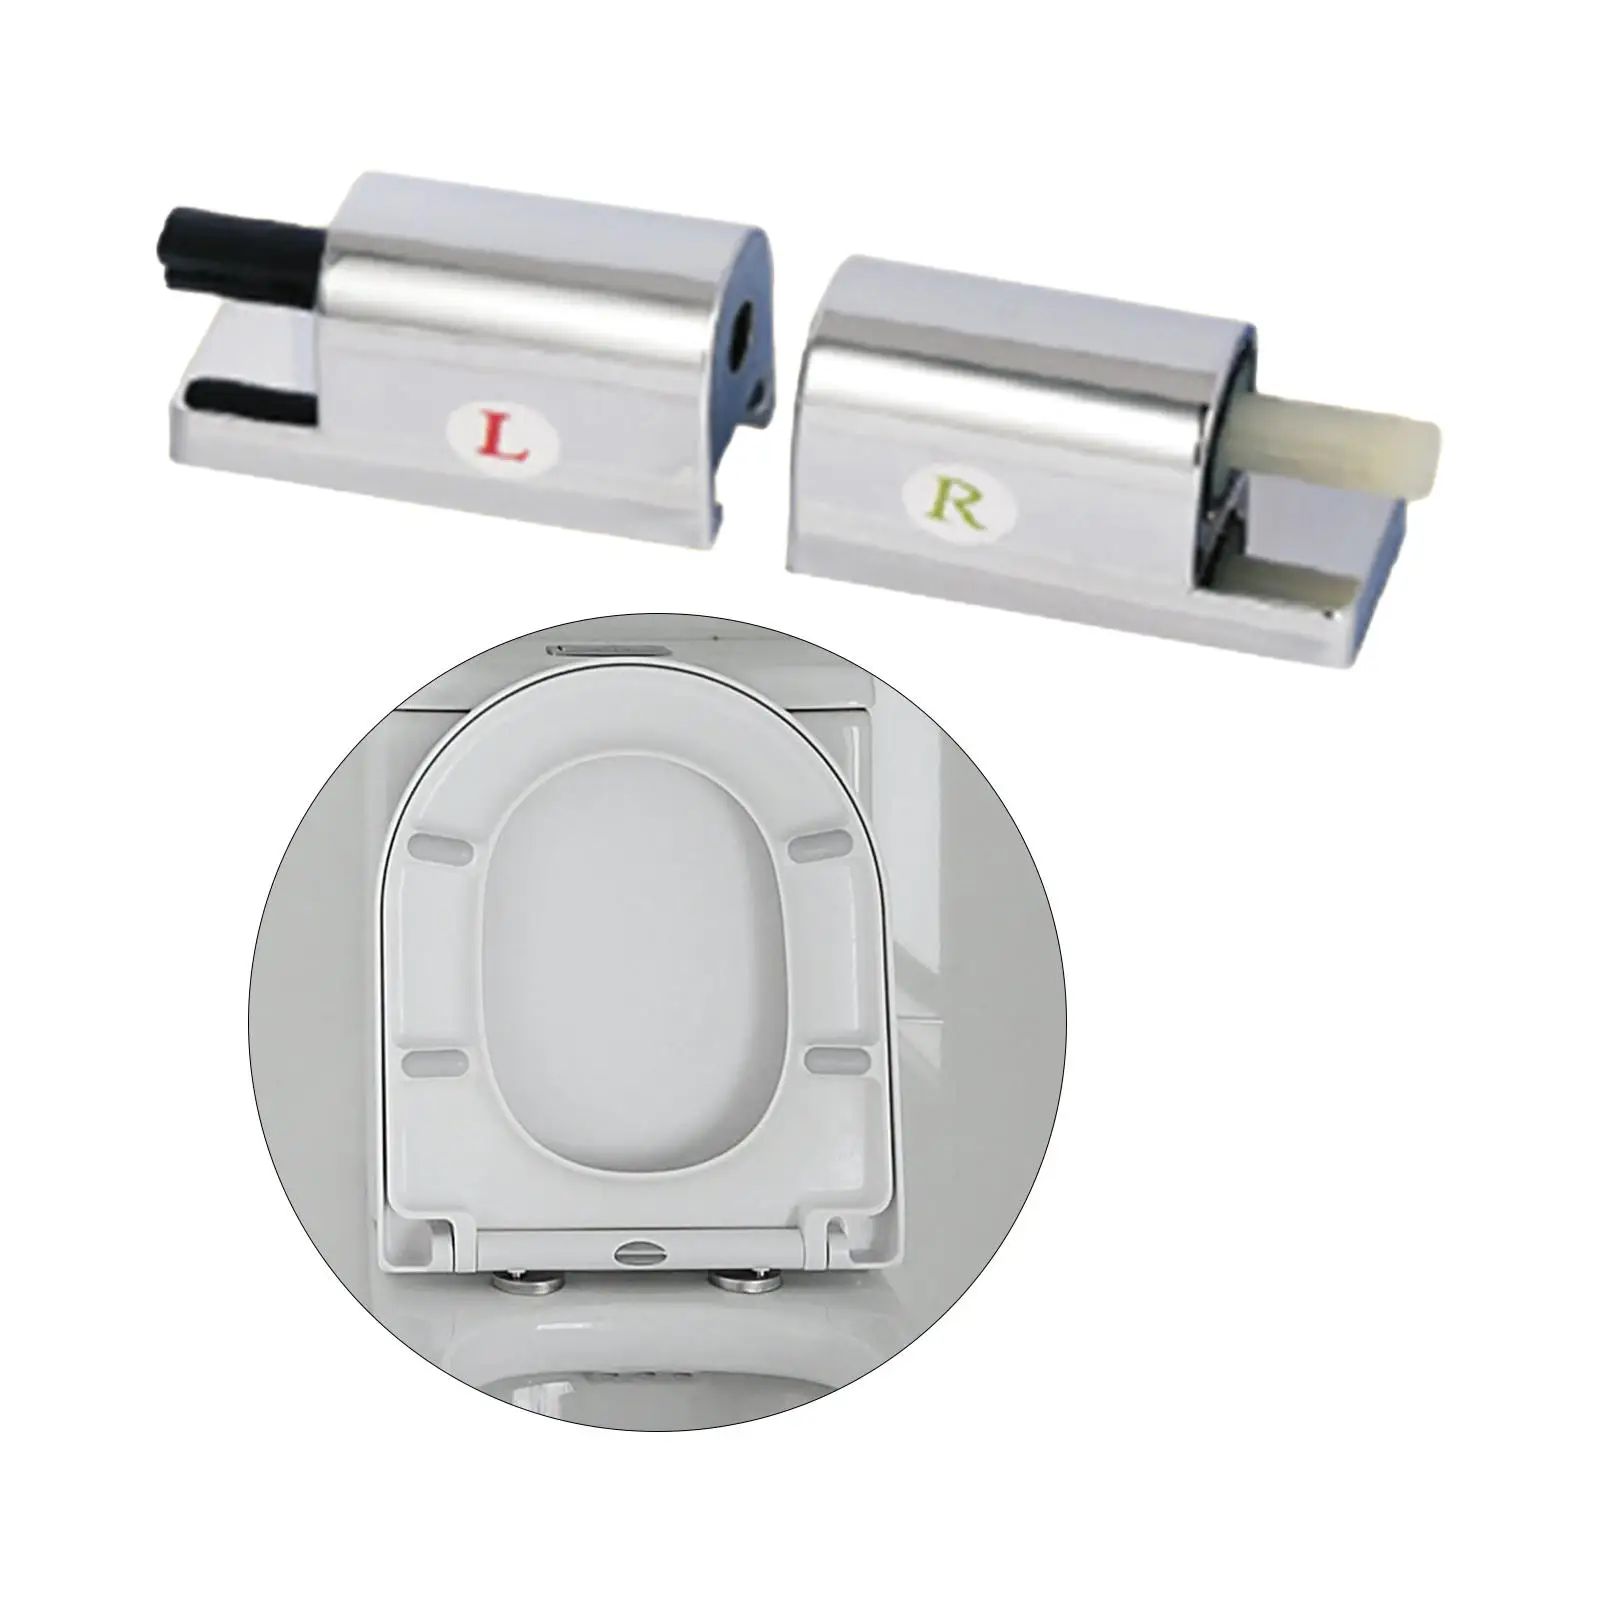 2x Toilet Seat Hinge Slow Drop Connector Toilet Seat Repair Replacement